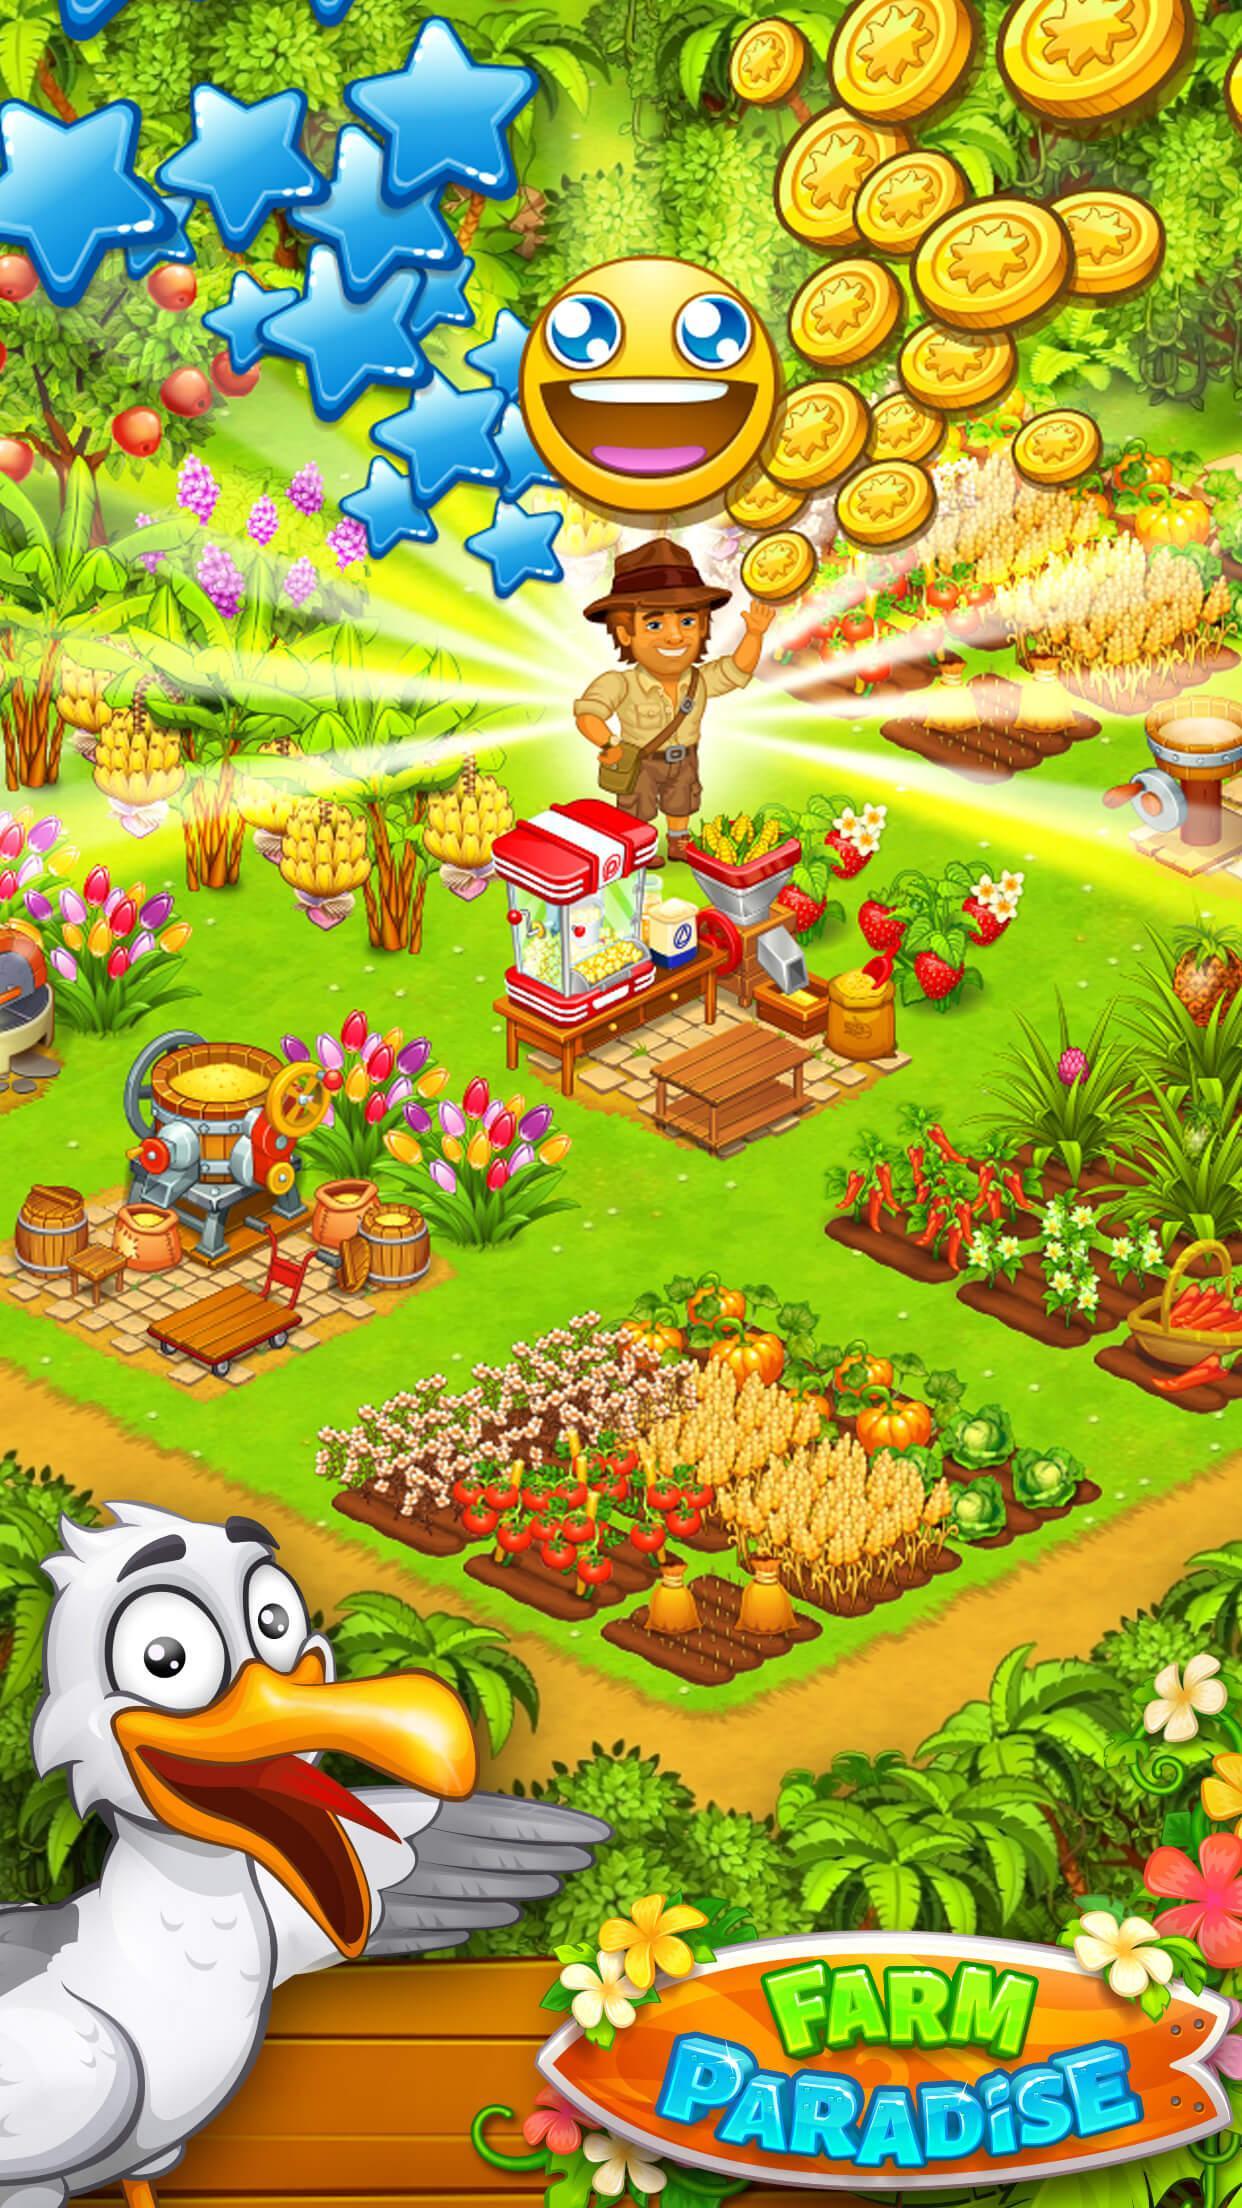 Farm Paradise Fun farm trade game at lost island 2.17 Screenshot 11